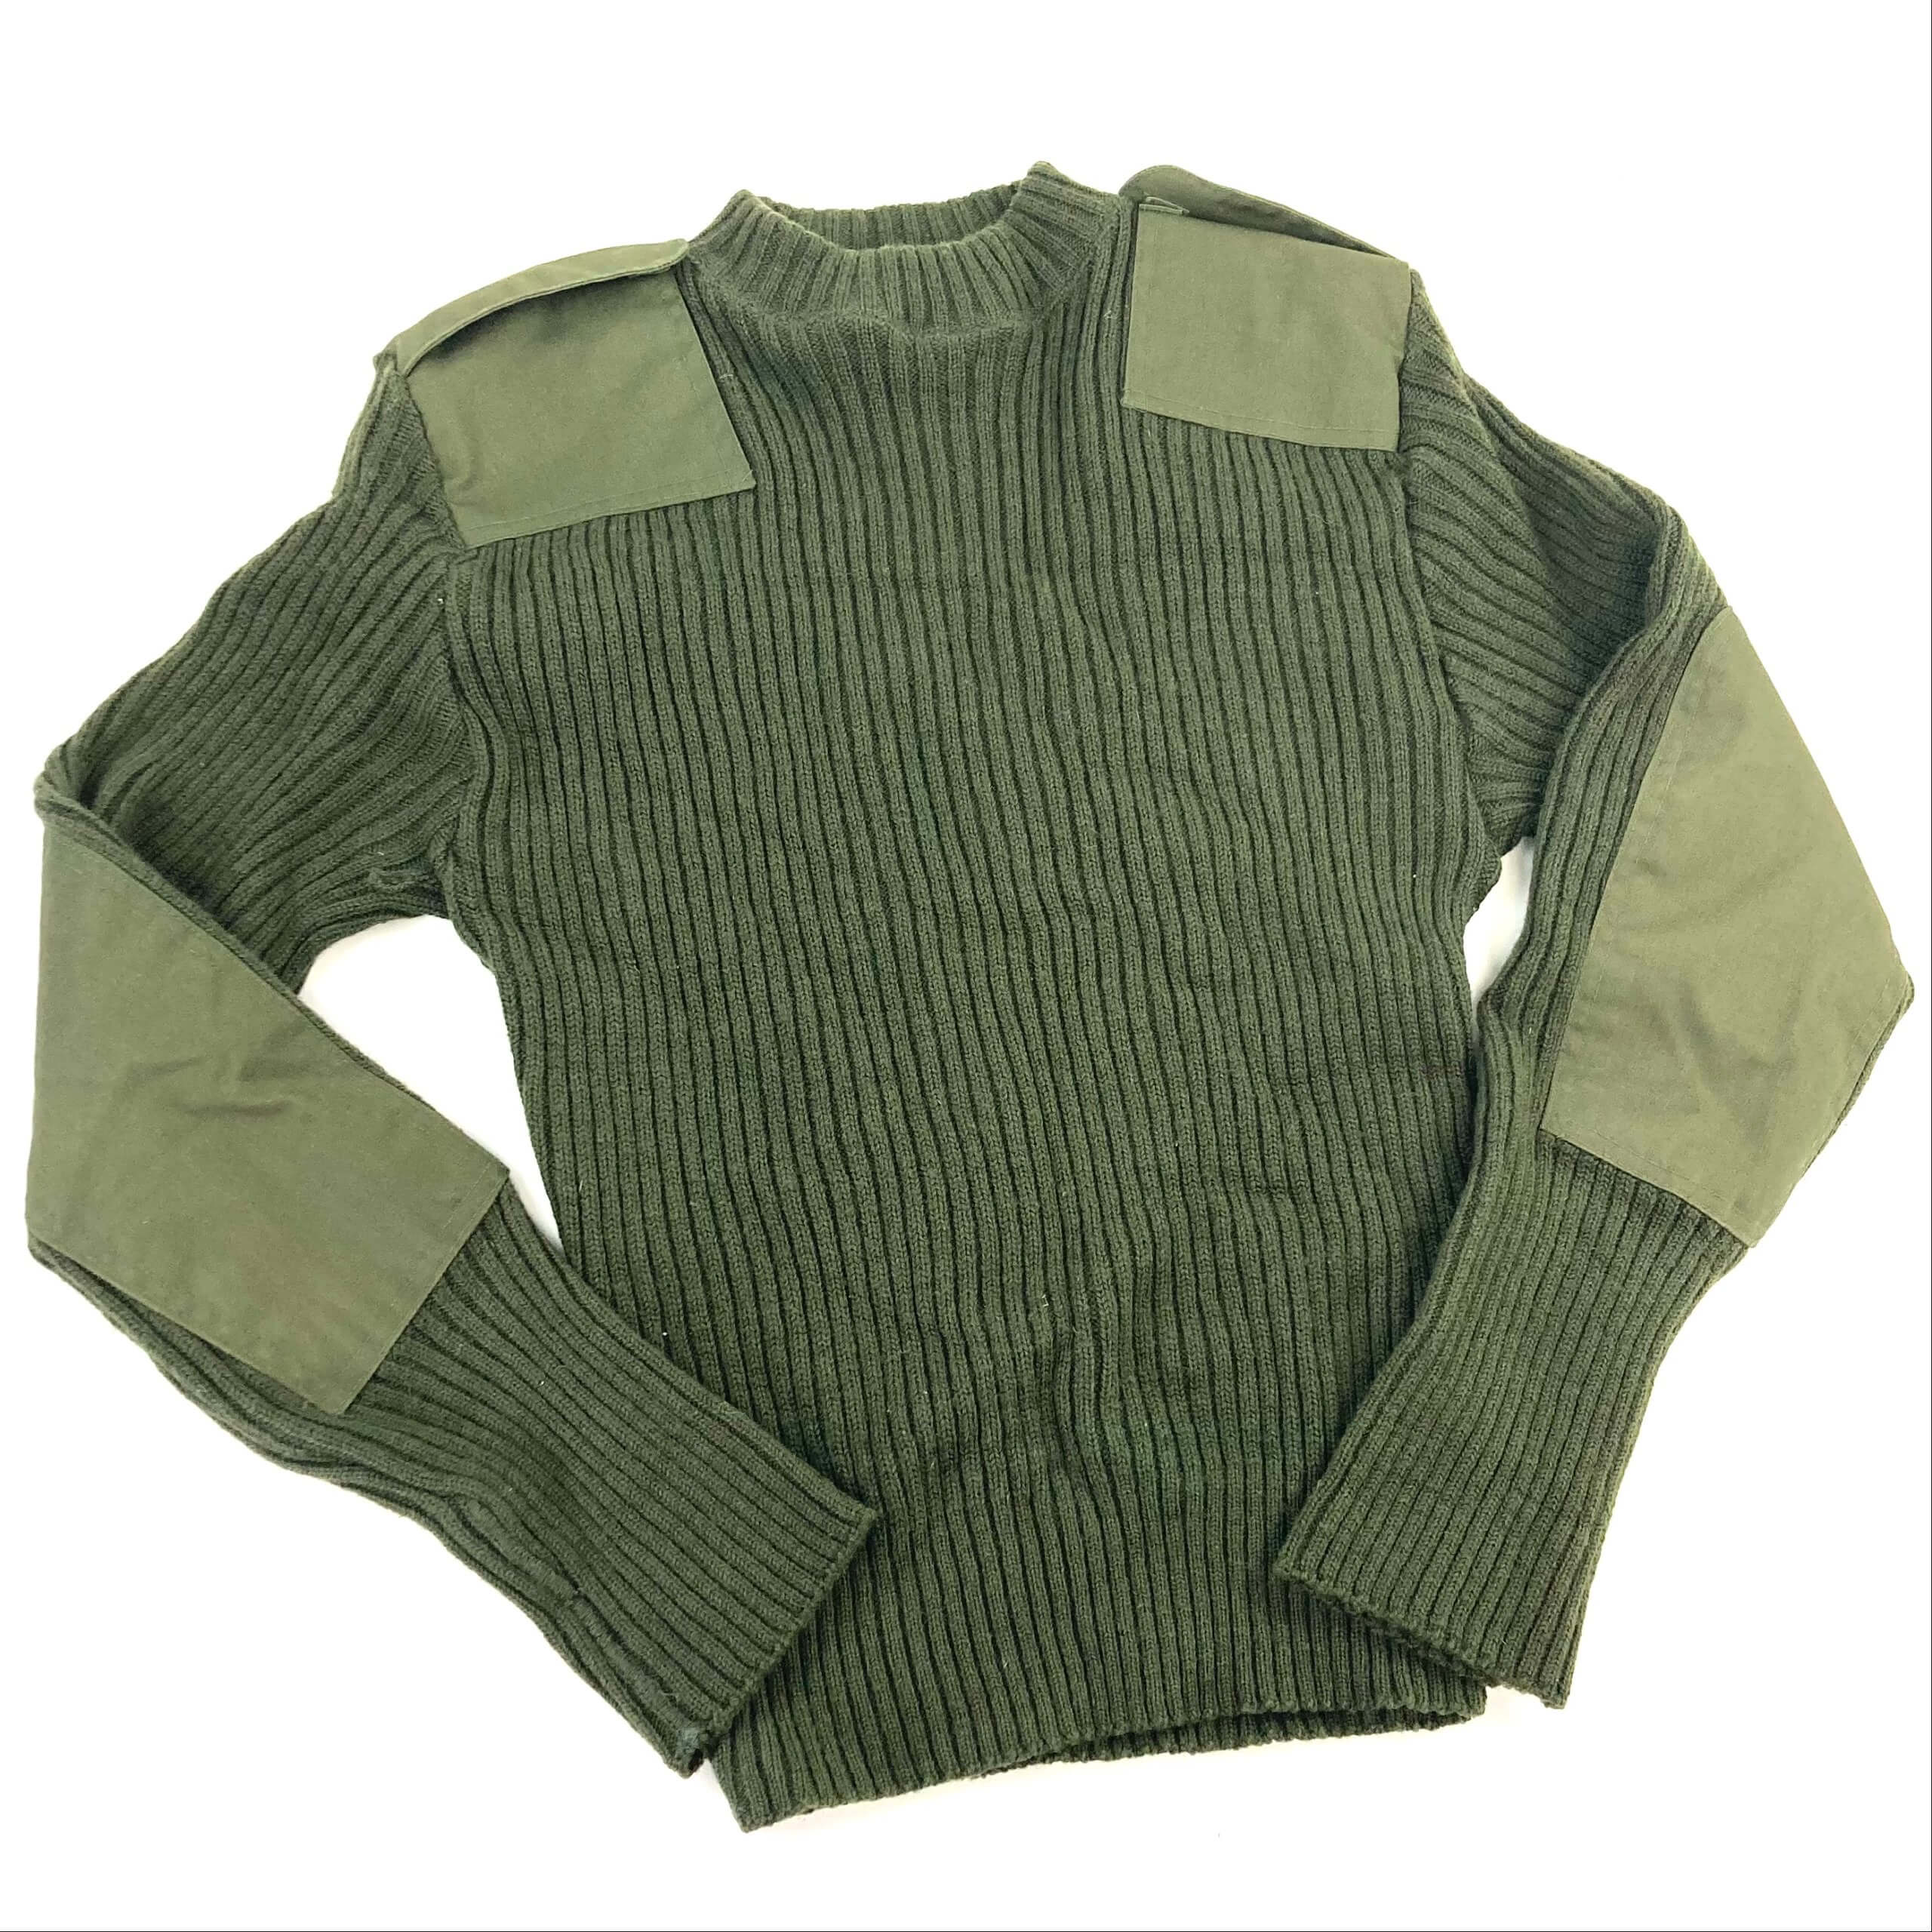 USGI Service Sweater with Epaulettes, Crew Neck, Wool, Olive Drab